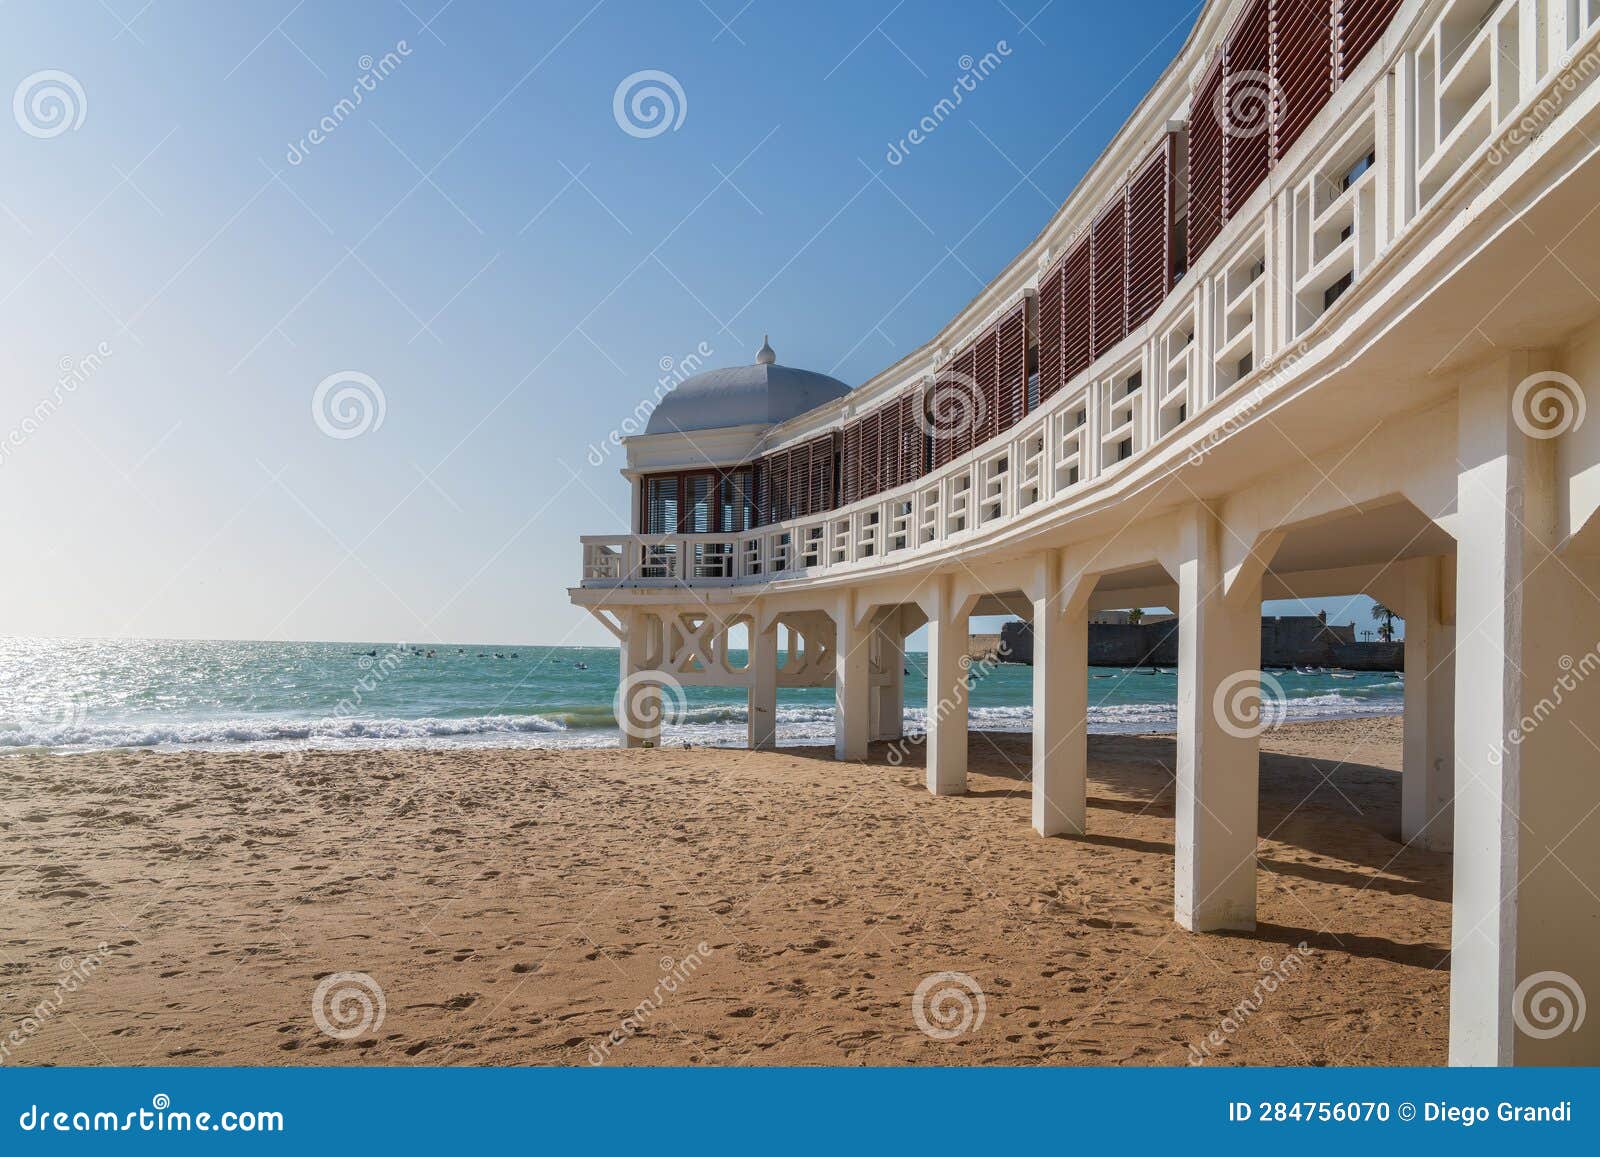 la caleta beach and balneario de la palma building - cadiz, andalusia, spain